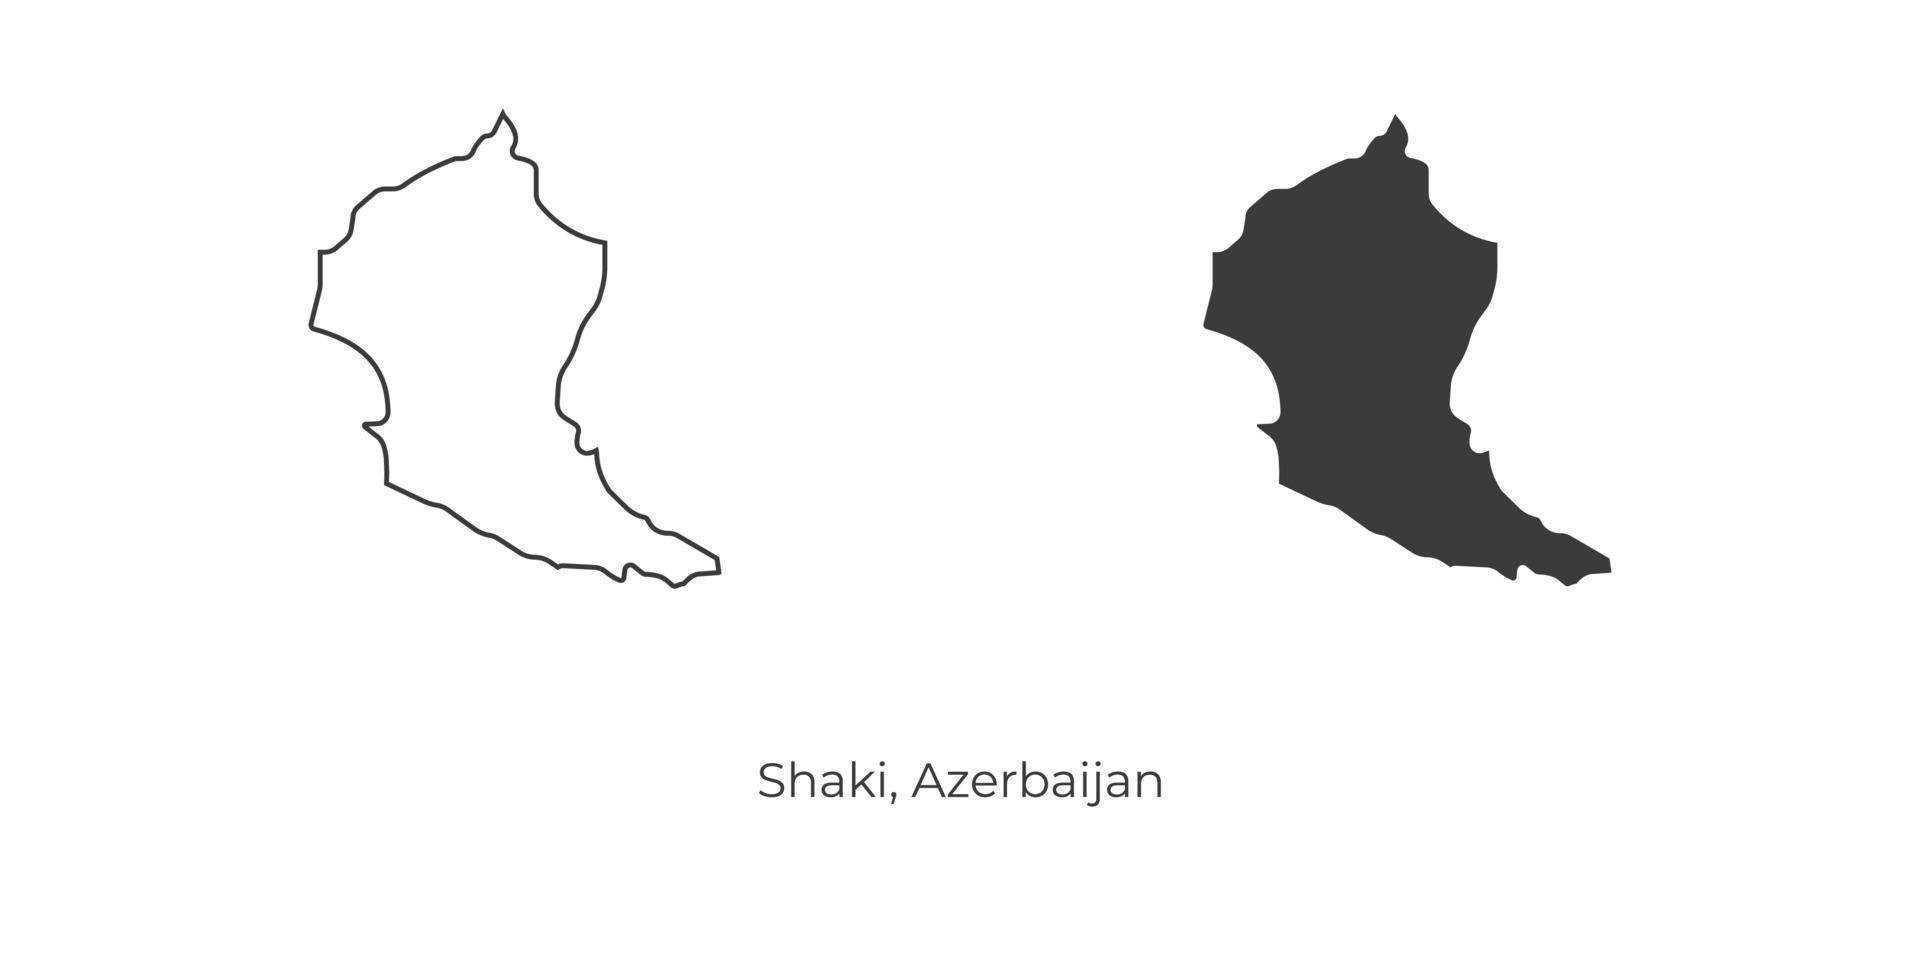 illustration vectorielle simple de la carte de shaki, azerbaïdjan. vecteur